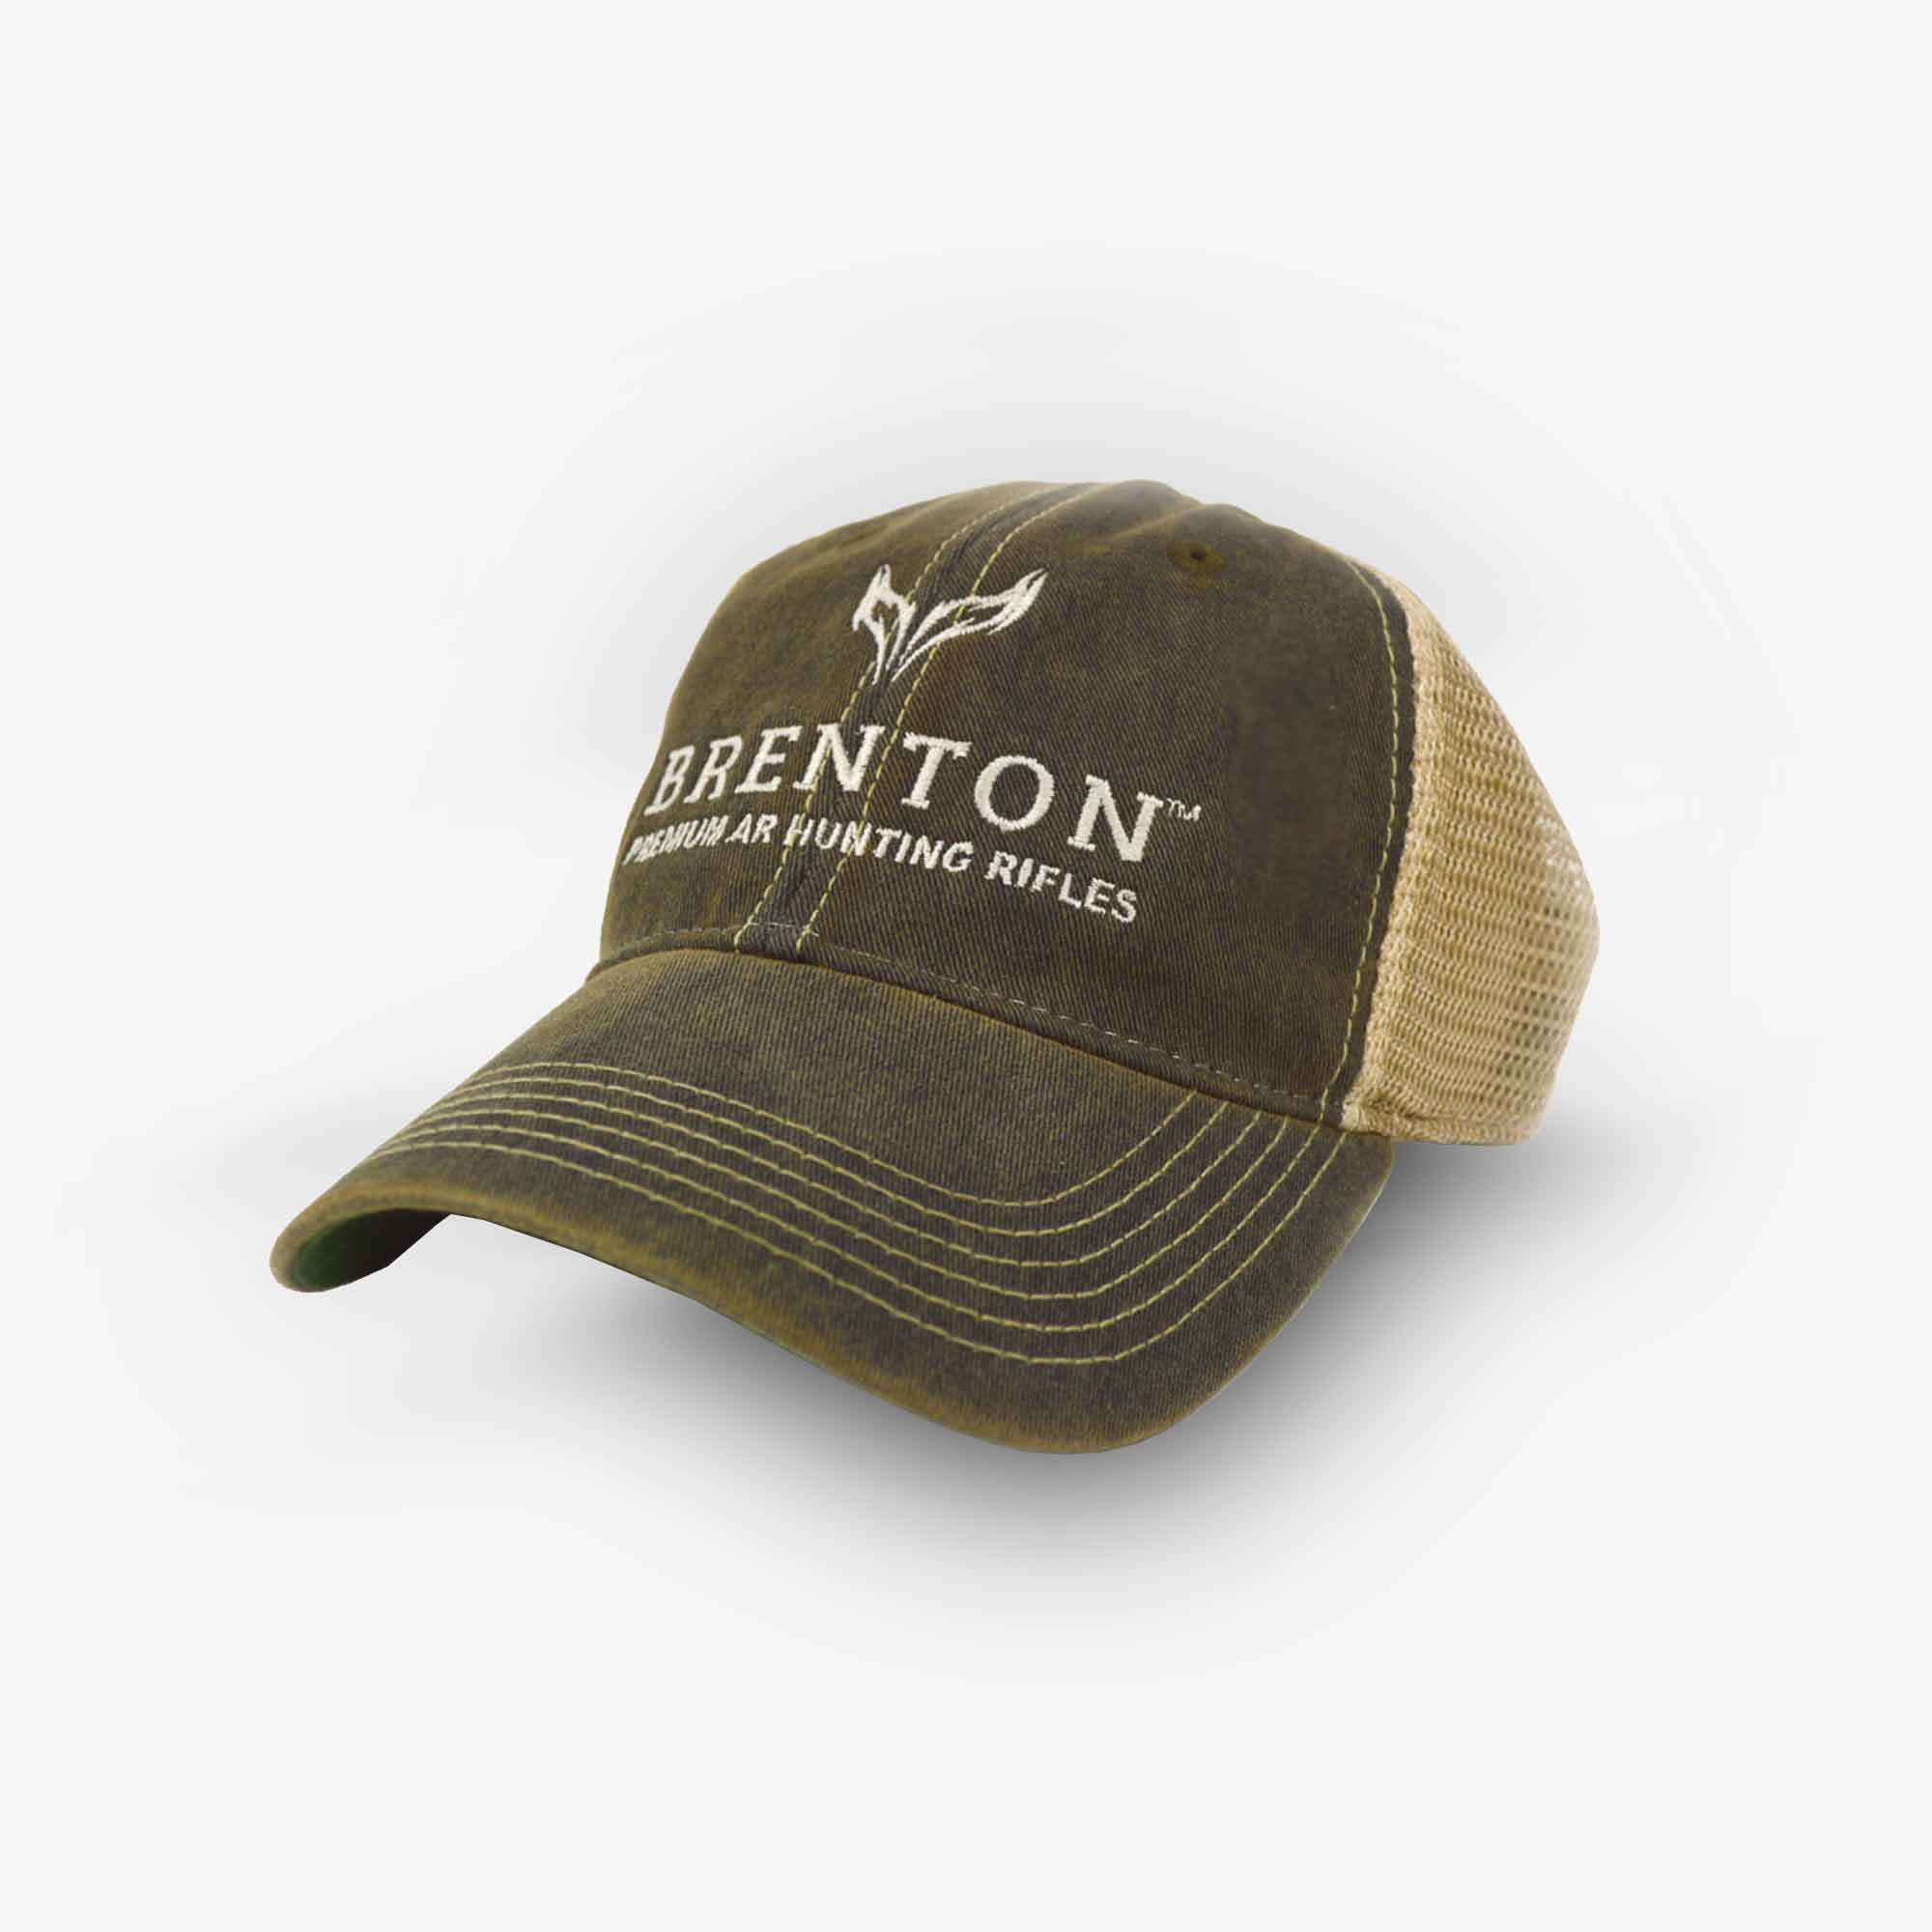 Brenton-AR-Hunting-Rifle-Hat